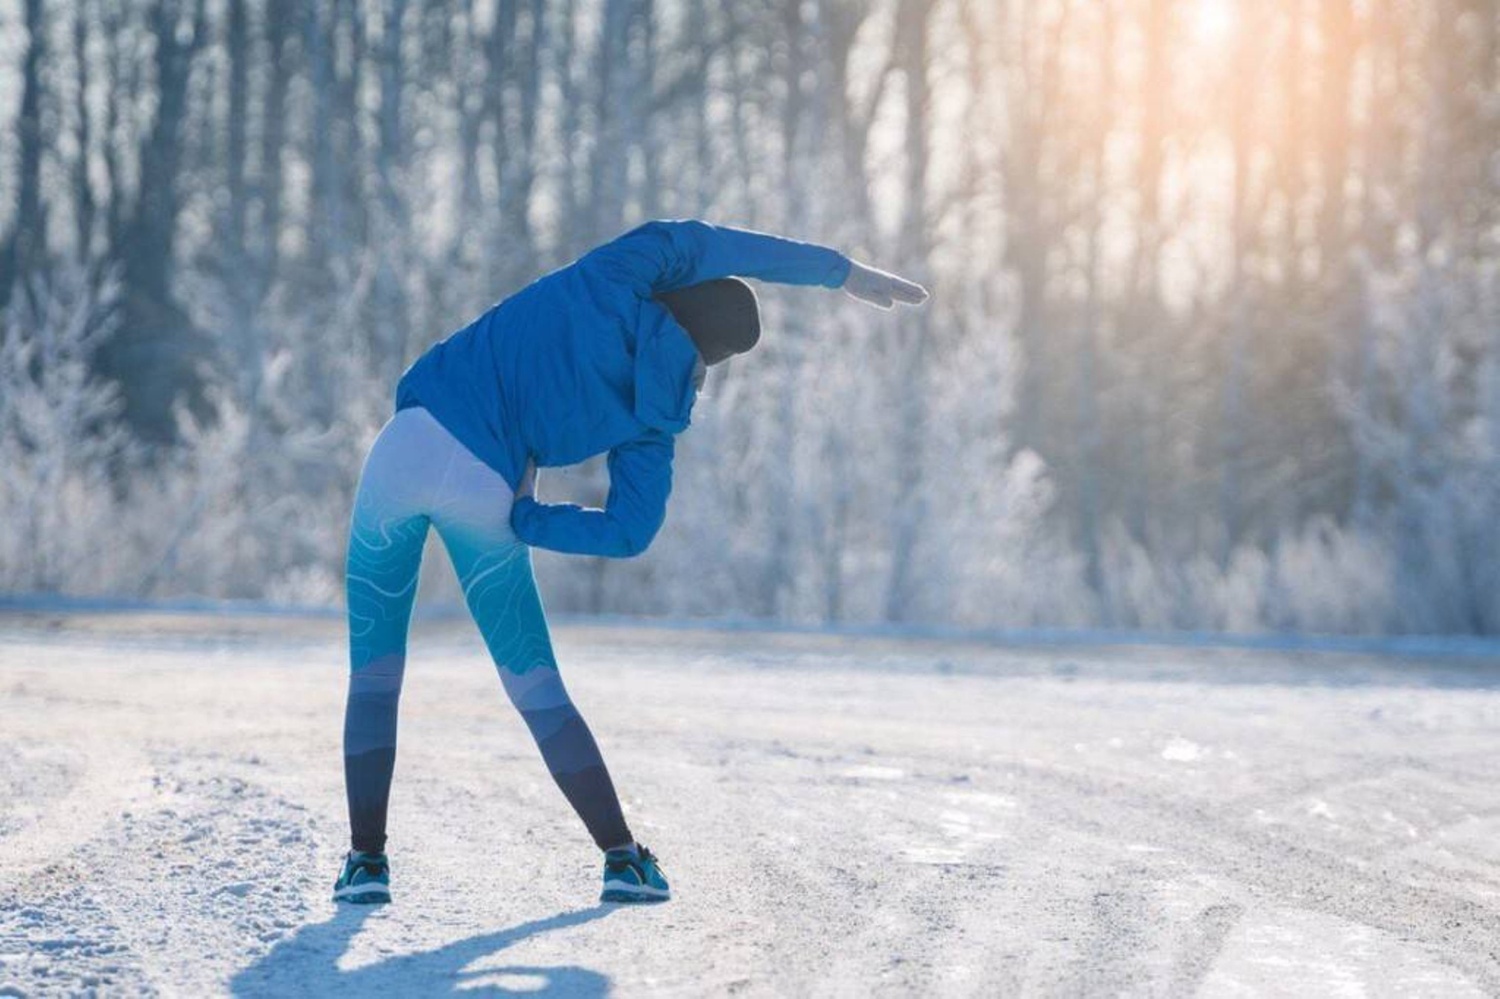 Do sport the winter. Бег зимой. Зимняя пробежка. Спортивный образ жизни зима. Разминка зимой.